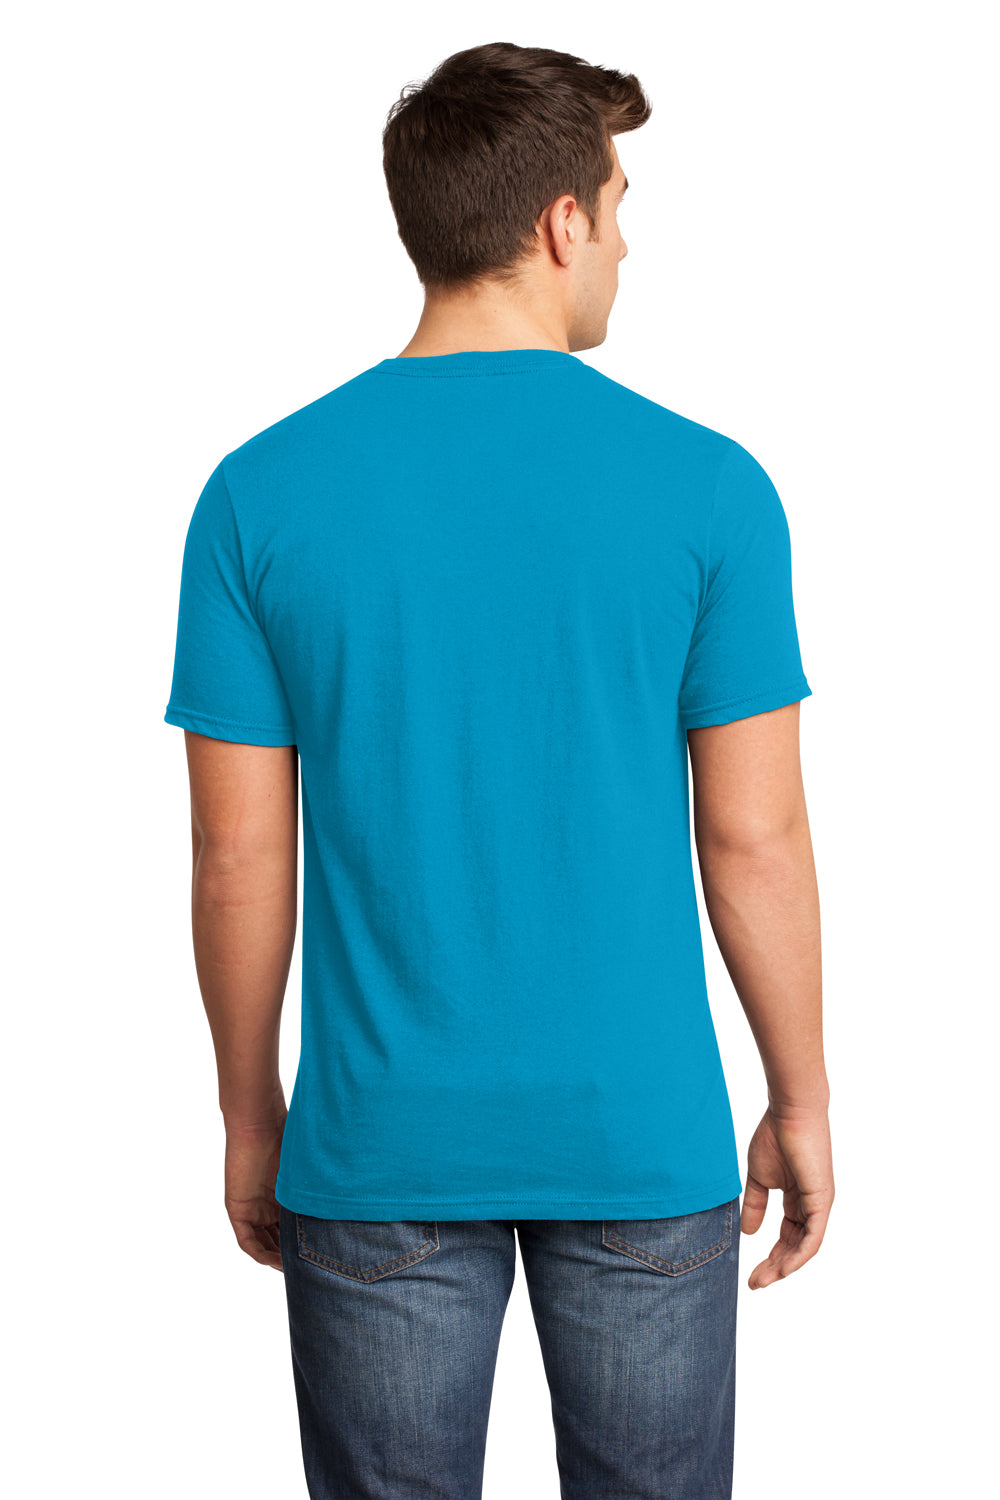 District DT6500 Mens Very Important Short Sleeve V-Neck T-Shirt Light Turquoise Blue Back